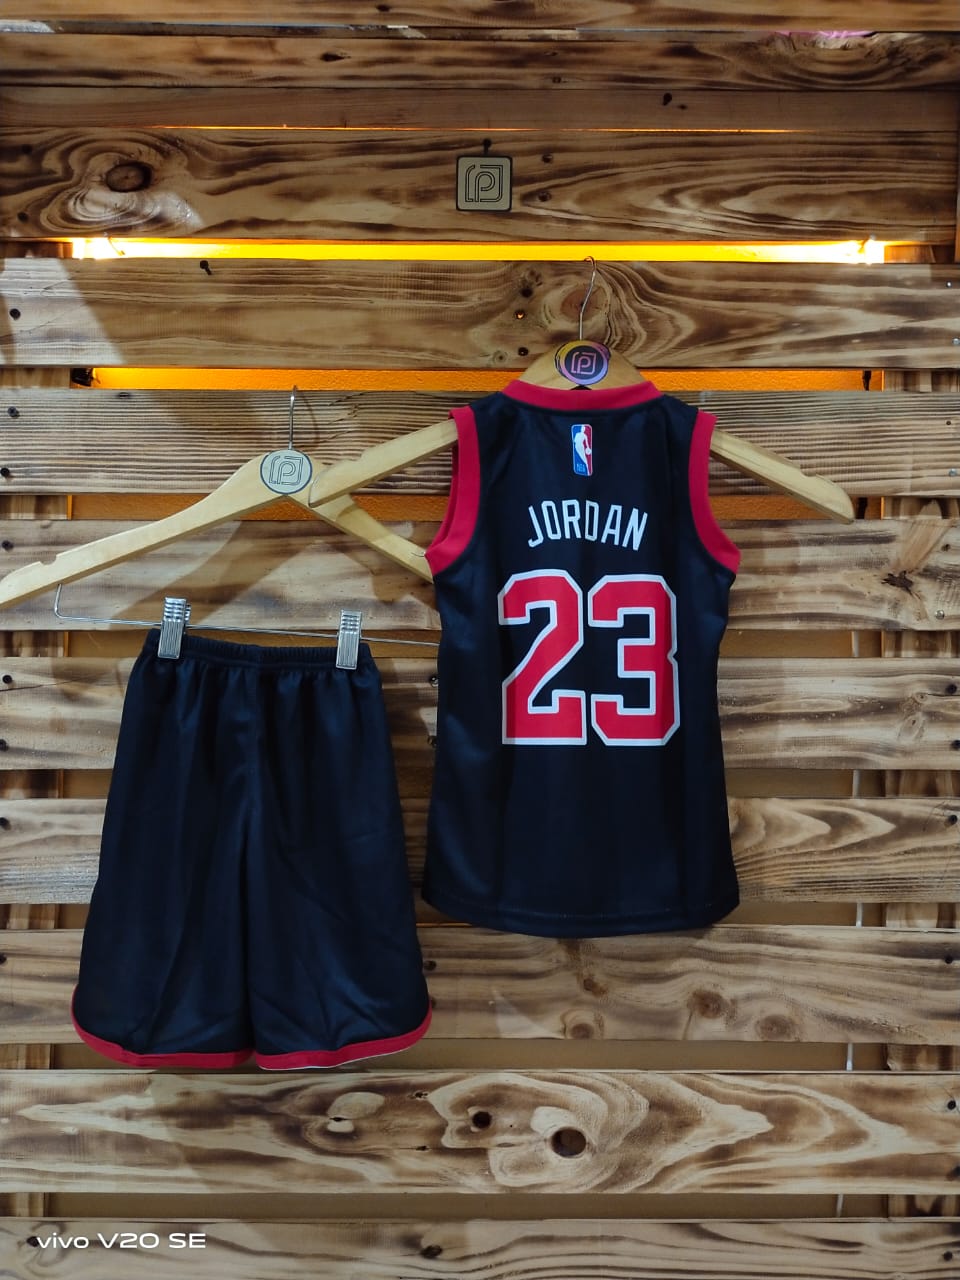 Jual Jersey / Kostum Basket anak-anak ( Basketball Uniforms for Kids ) -  Nets, L - Kota Surabaya - Spovers Storage